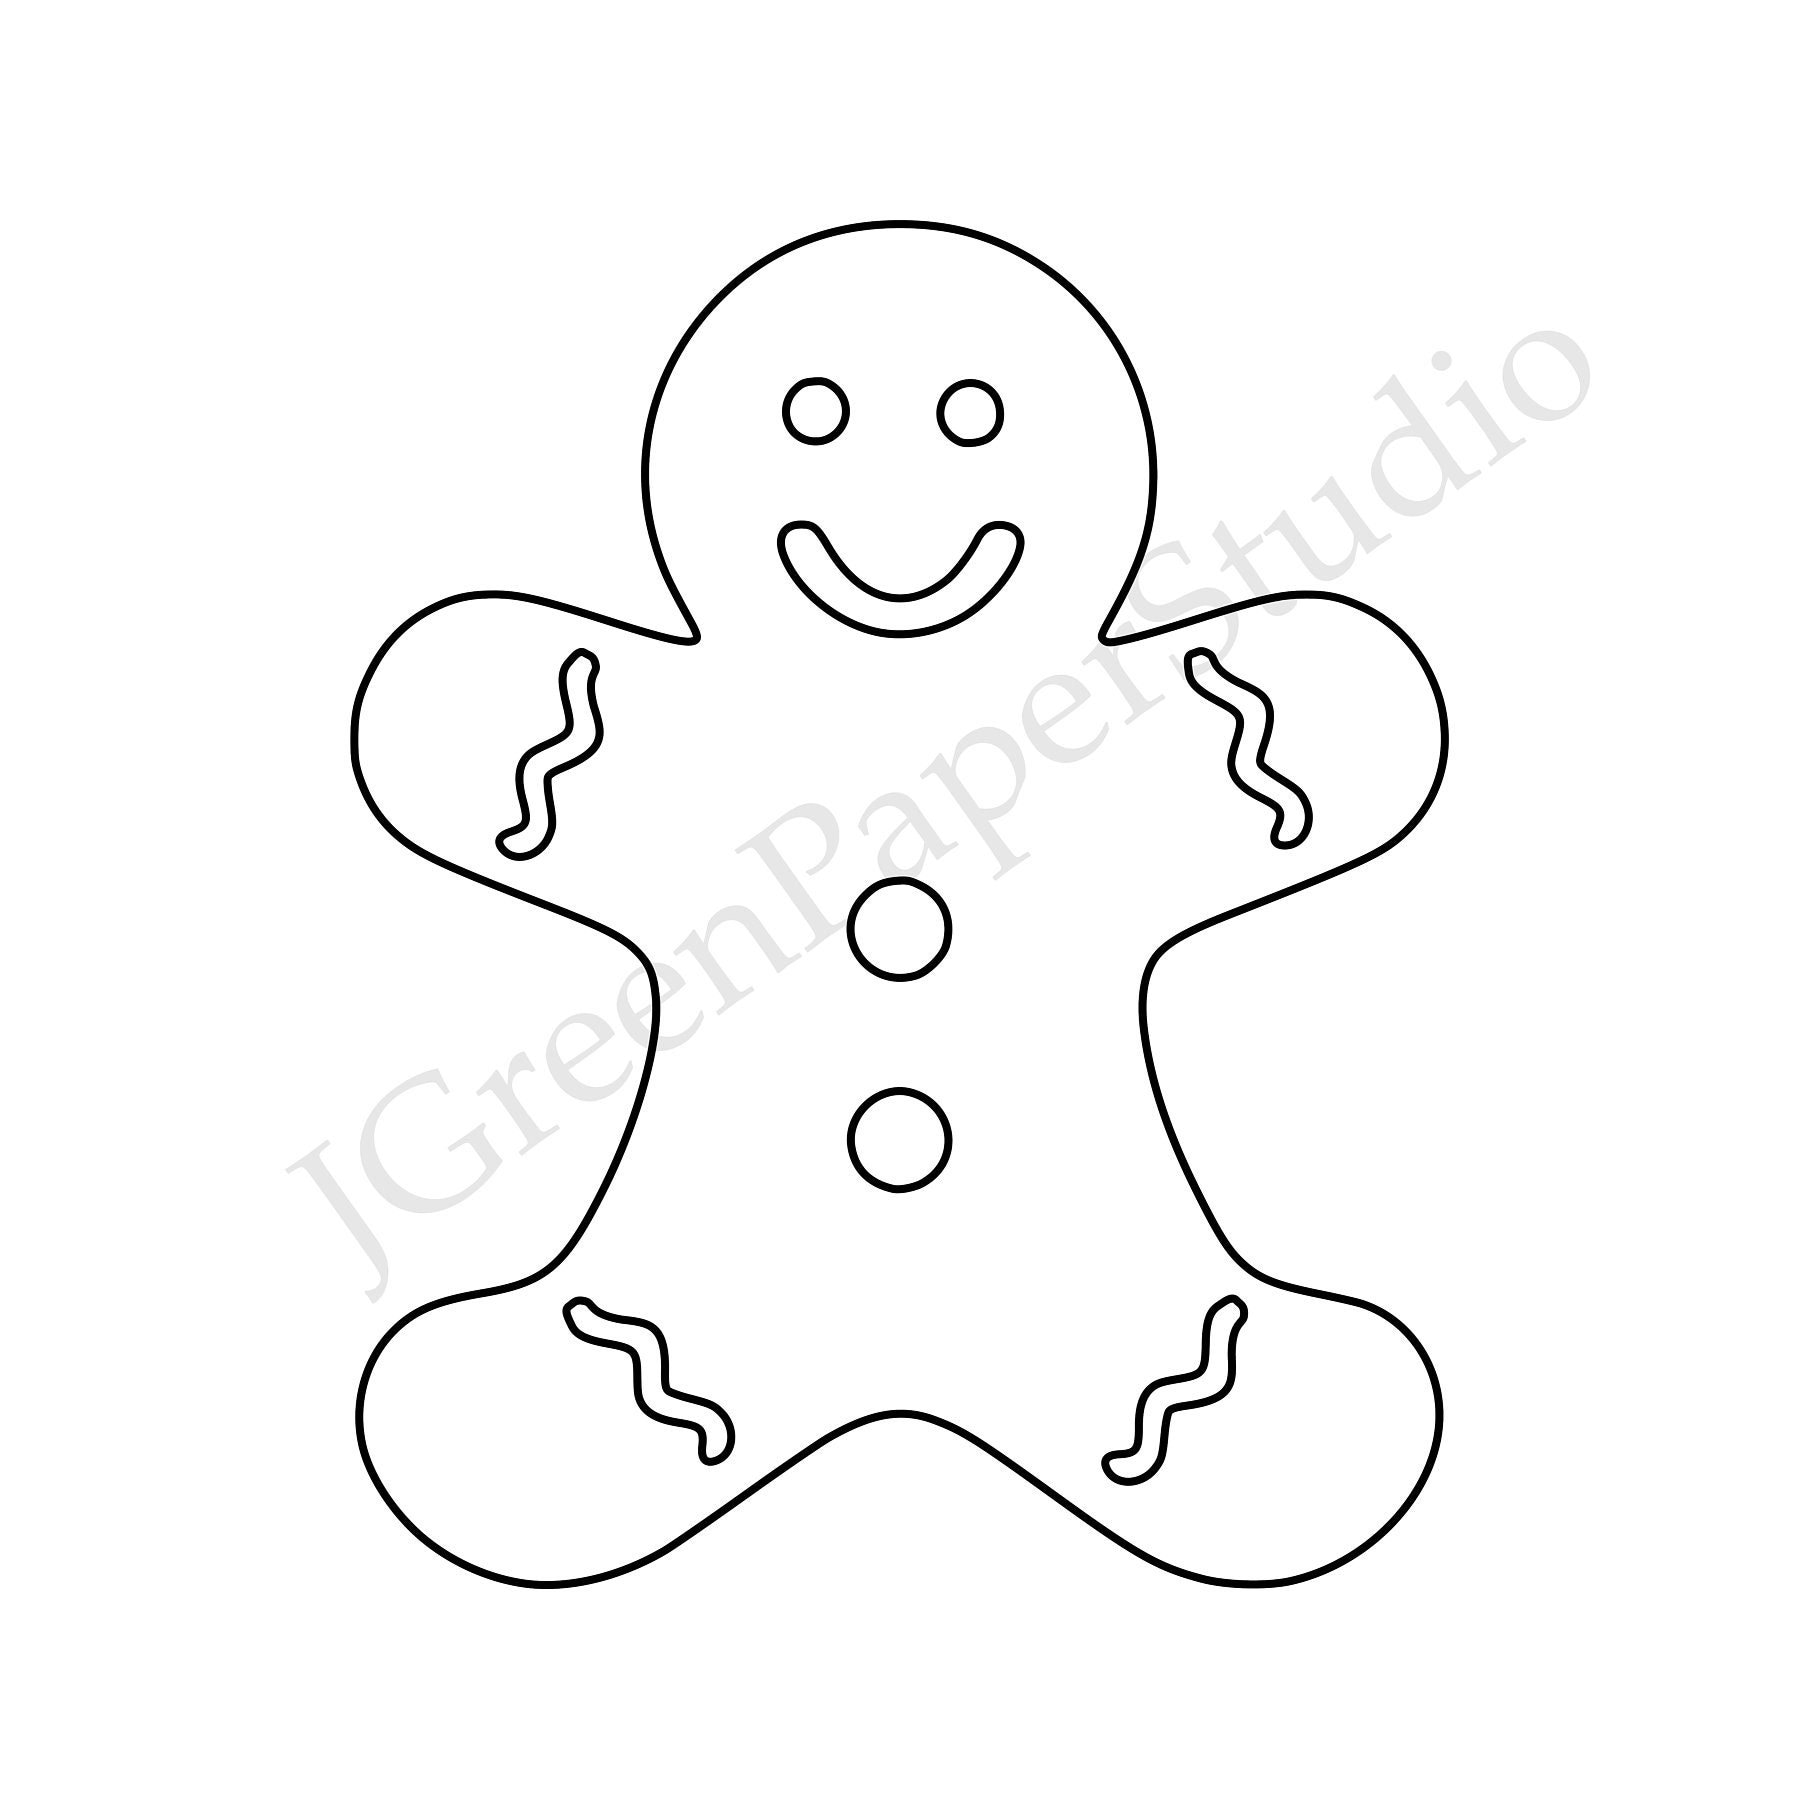 Printable gingerbread man template